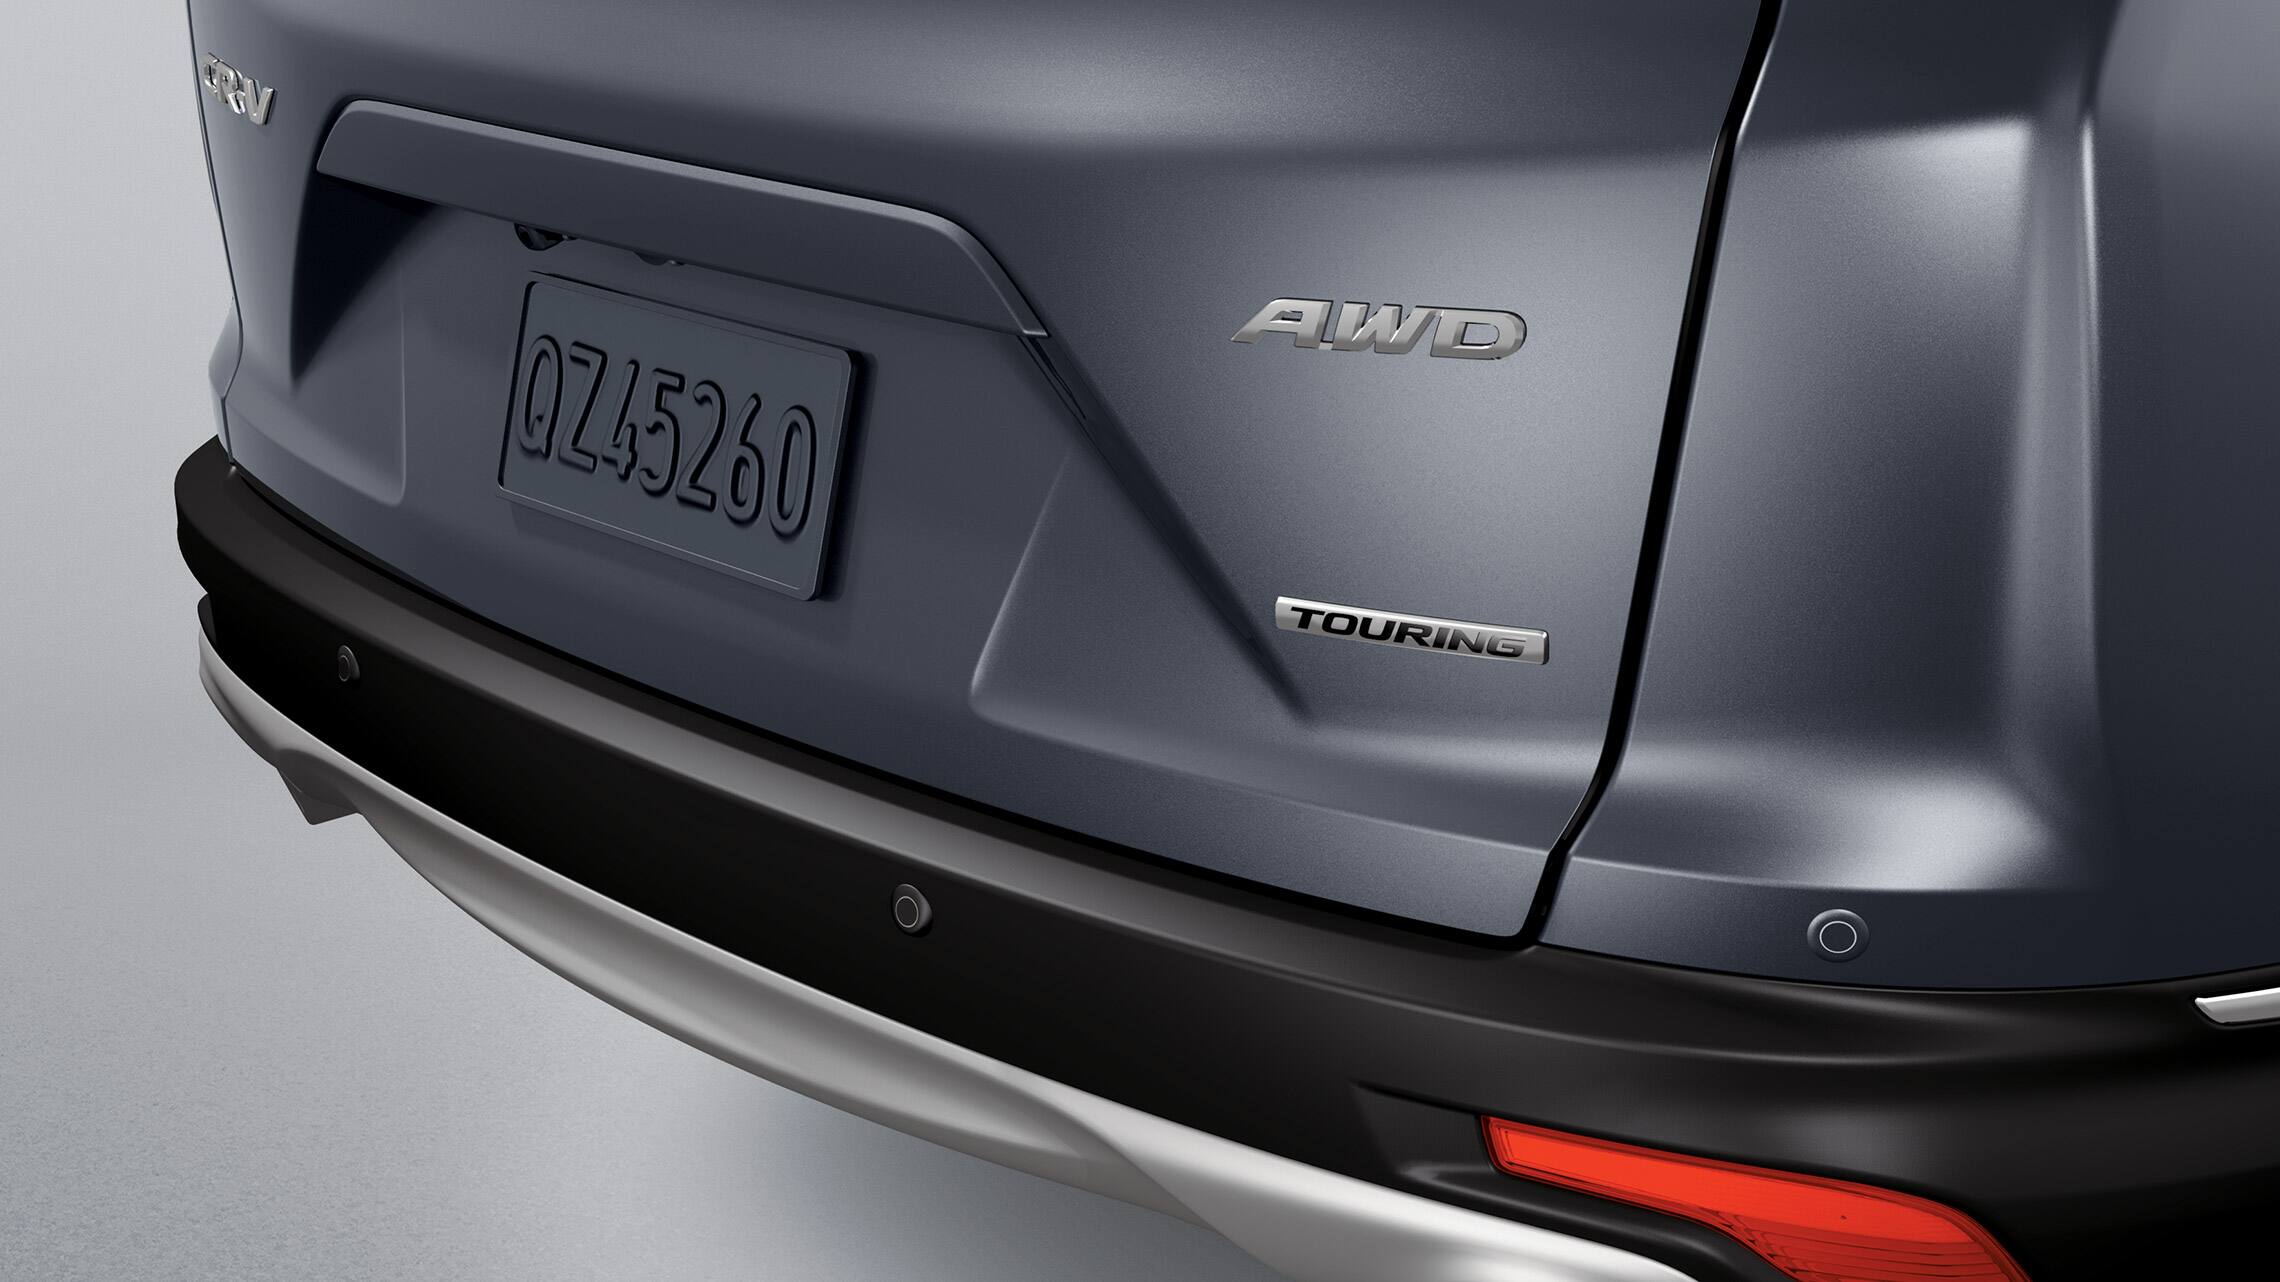 2019 Honda CR-V shown with Honda Genuine Accessory back-up sensors.